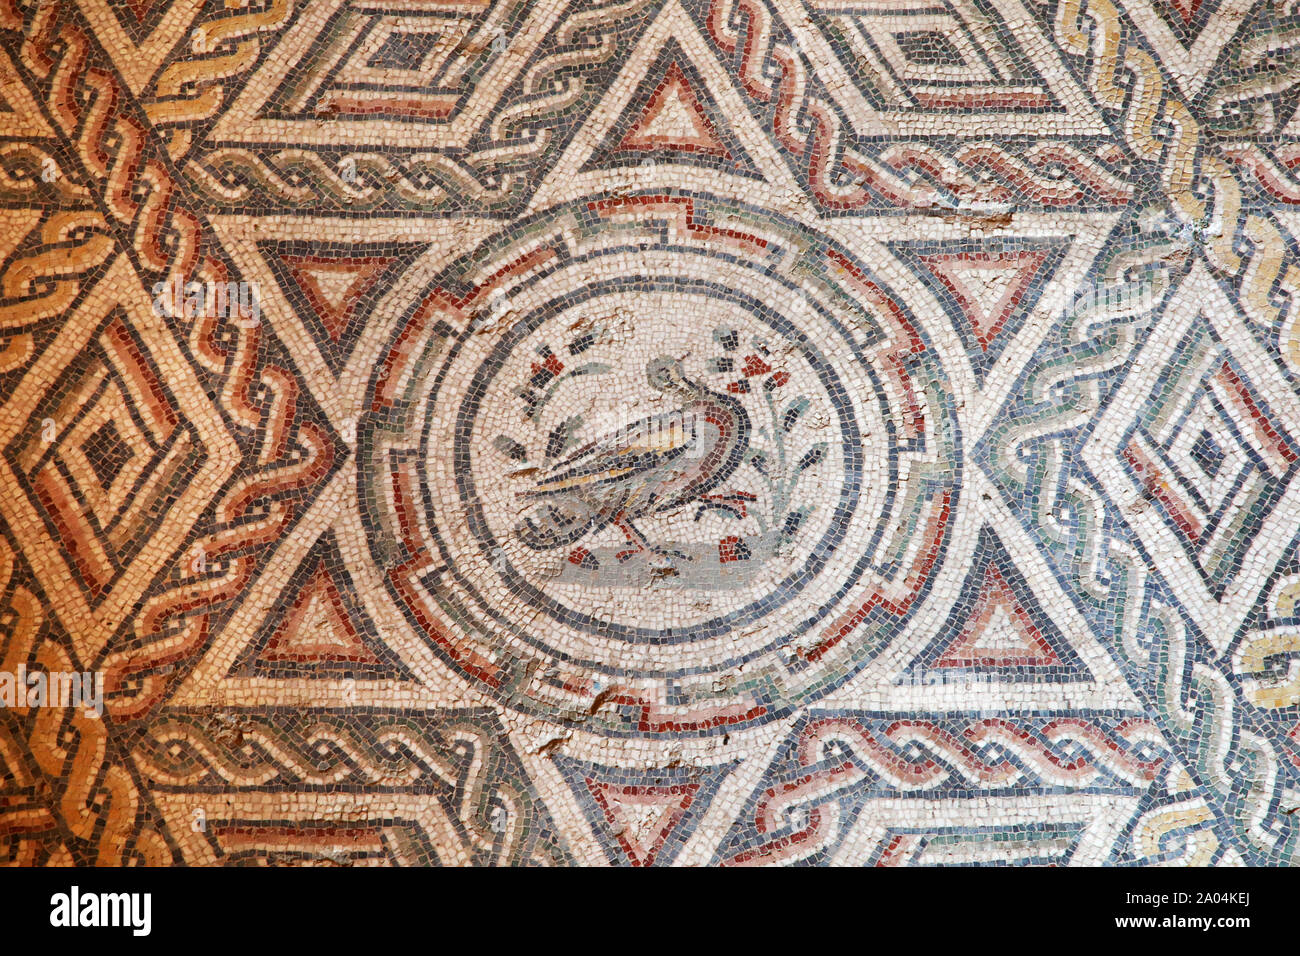 Duck in ancient roman mosaic, Sicily. From Villa del Casale in Piazza Armerina, Sicily, Italy. Stock Photo